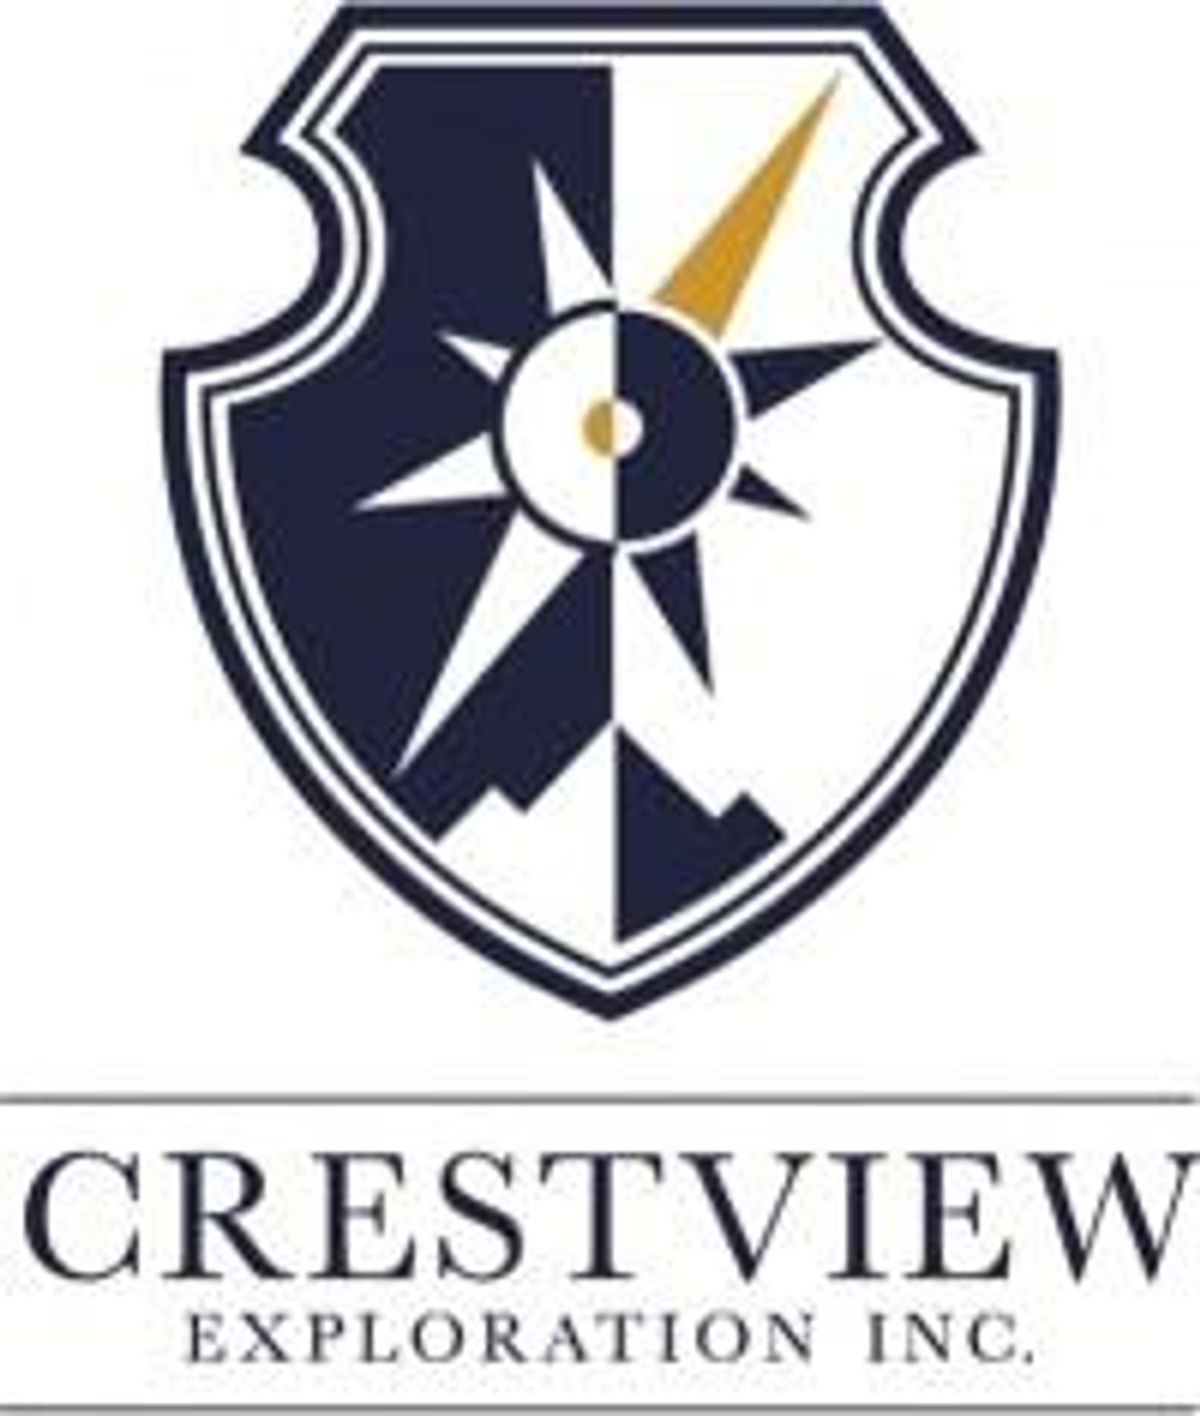 Crestview Exploration Inc. Announces Alan Morris to Join Advisory Board